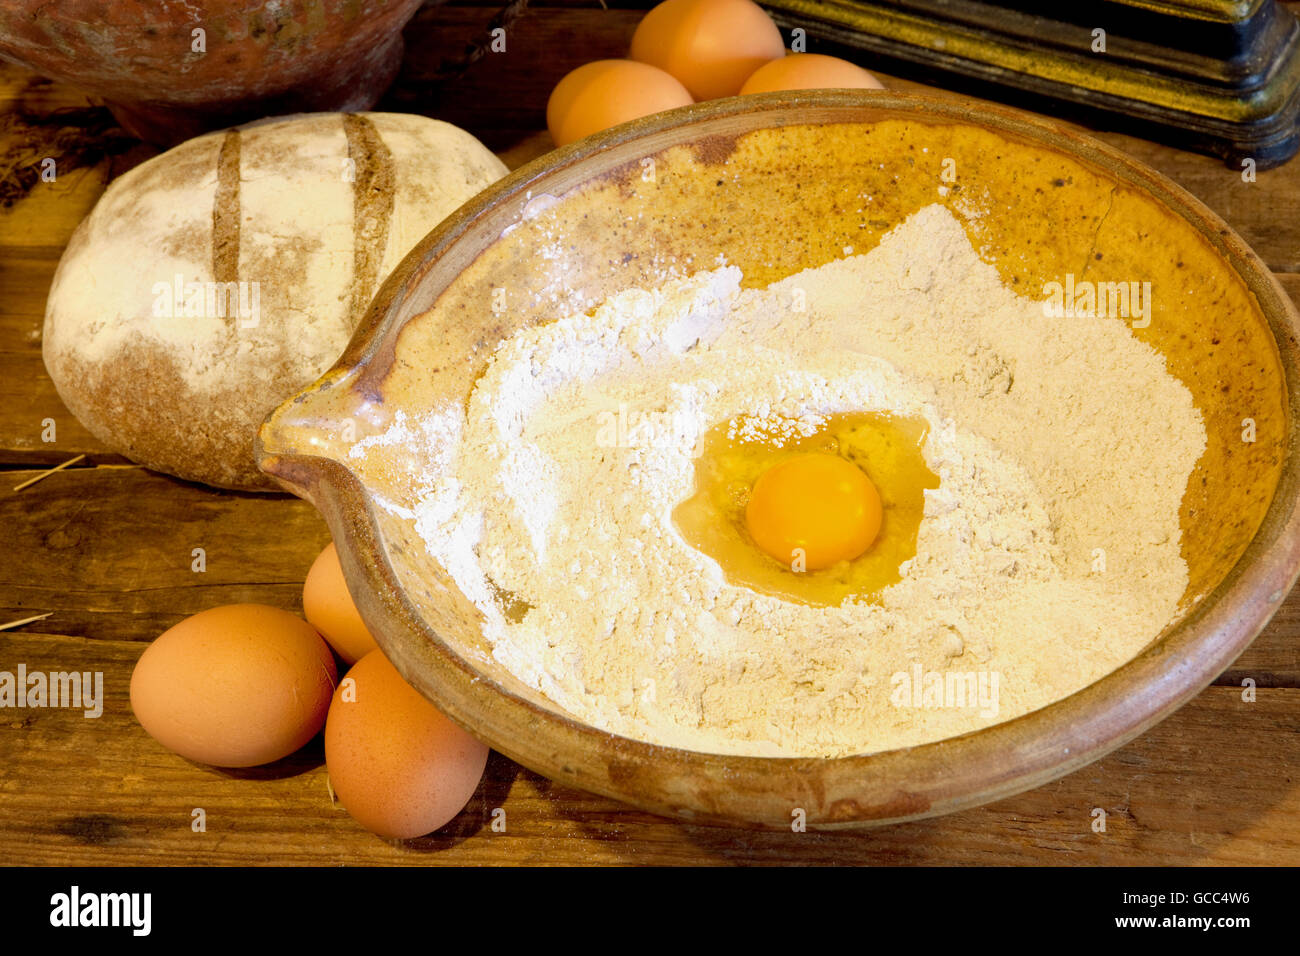 https://c8.alamy.com/comp/GCC4W6/flour-and-egg-yolk-in-an-antique-bowl-ready-to-make-bread-dough-GCC4W6.jpg